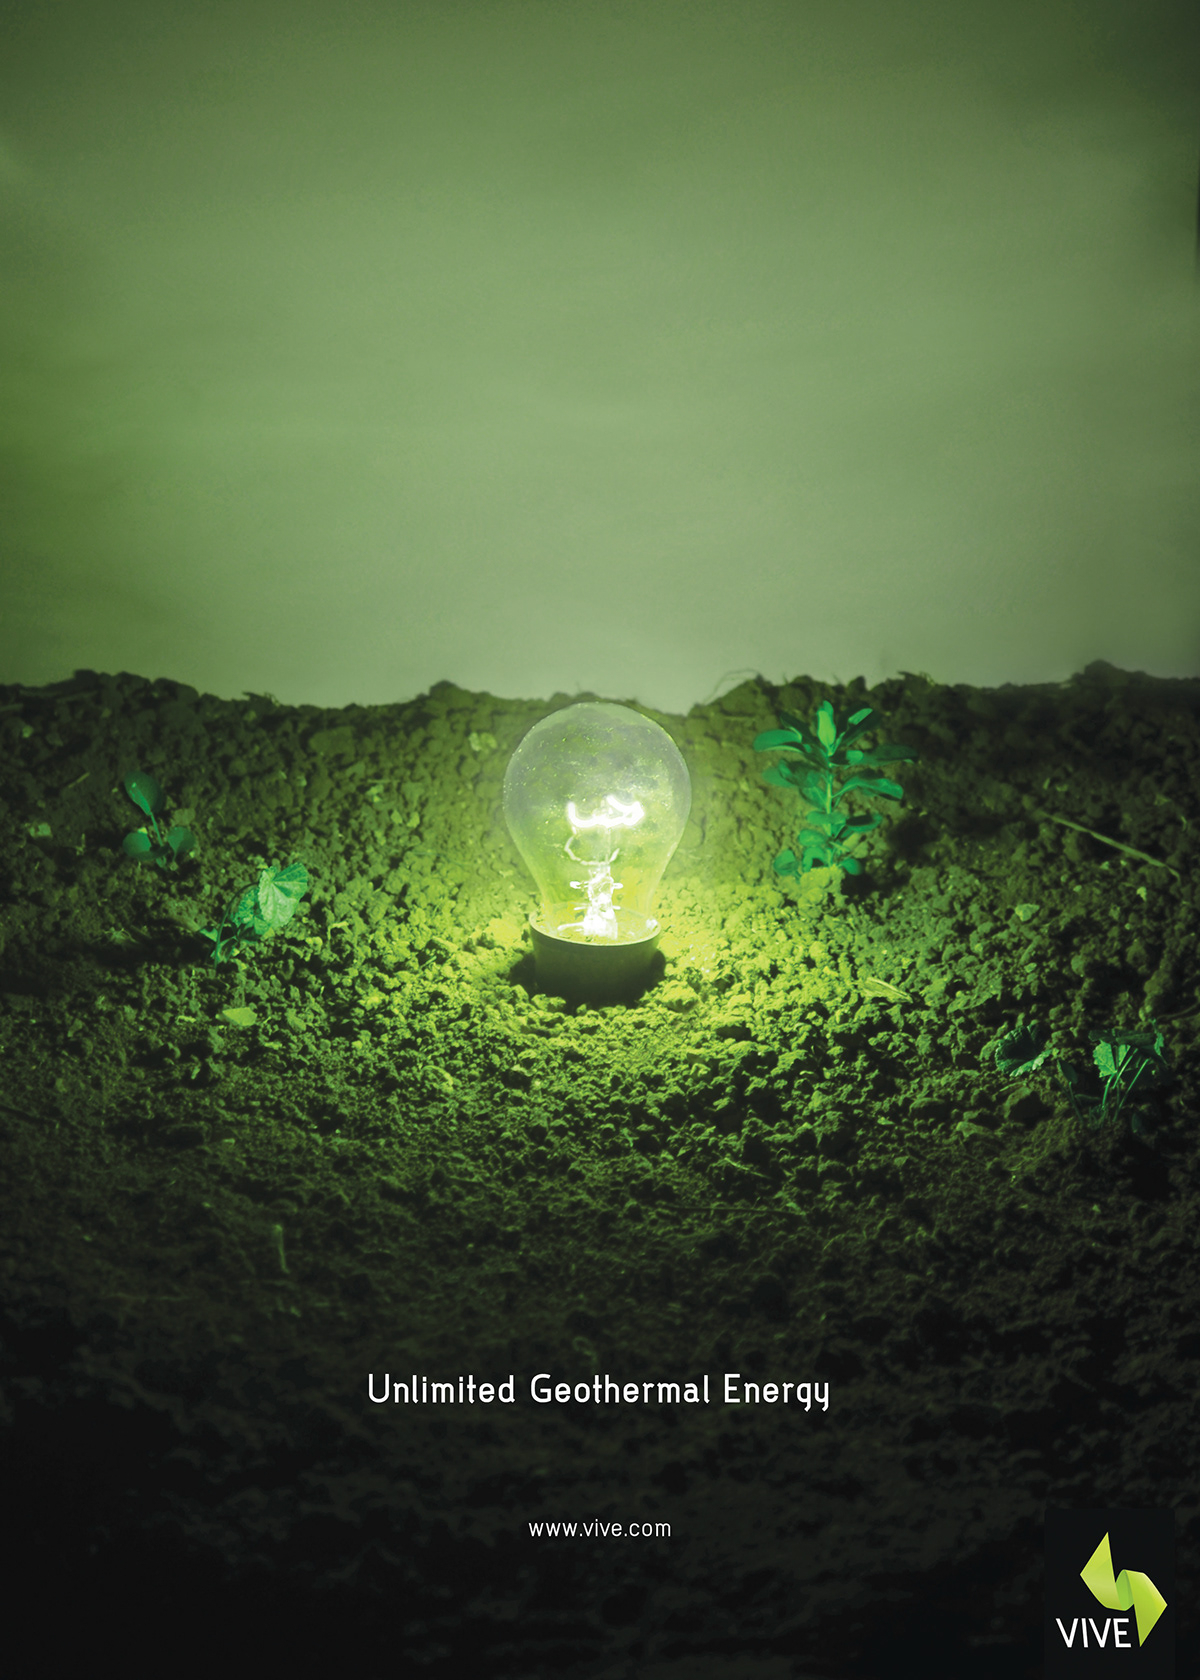 jordan green renewable infographic energy creative vive campaign graduation Project logo hamza aqel Booklet visual power